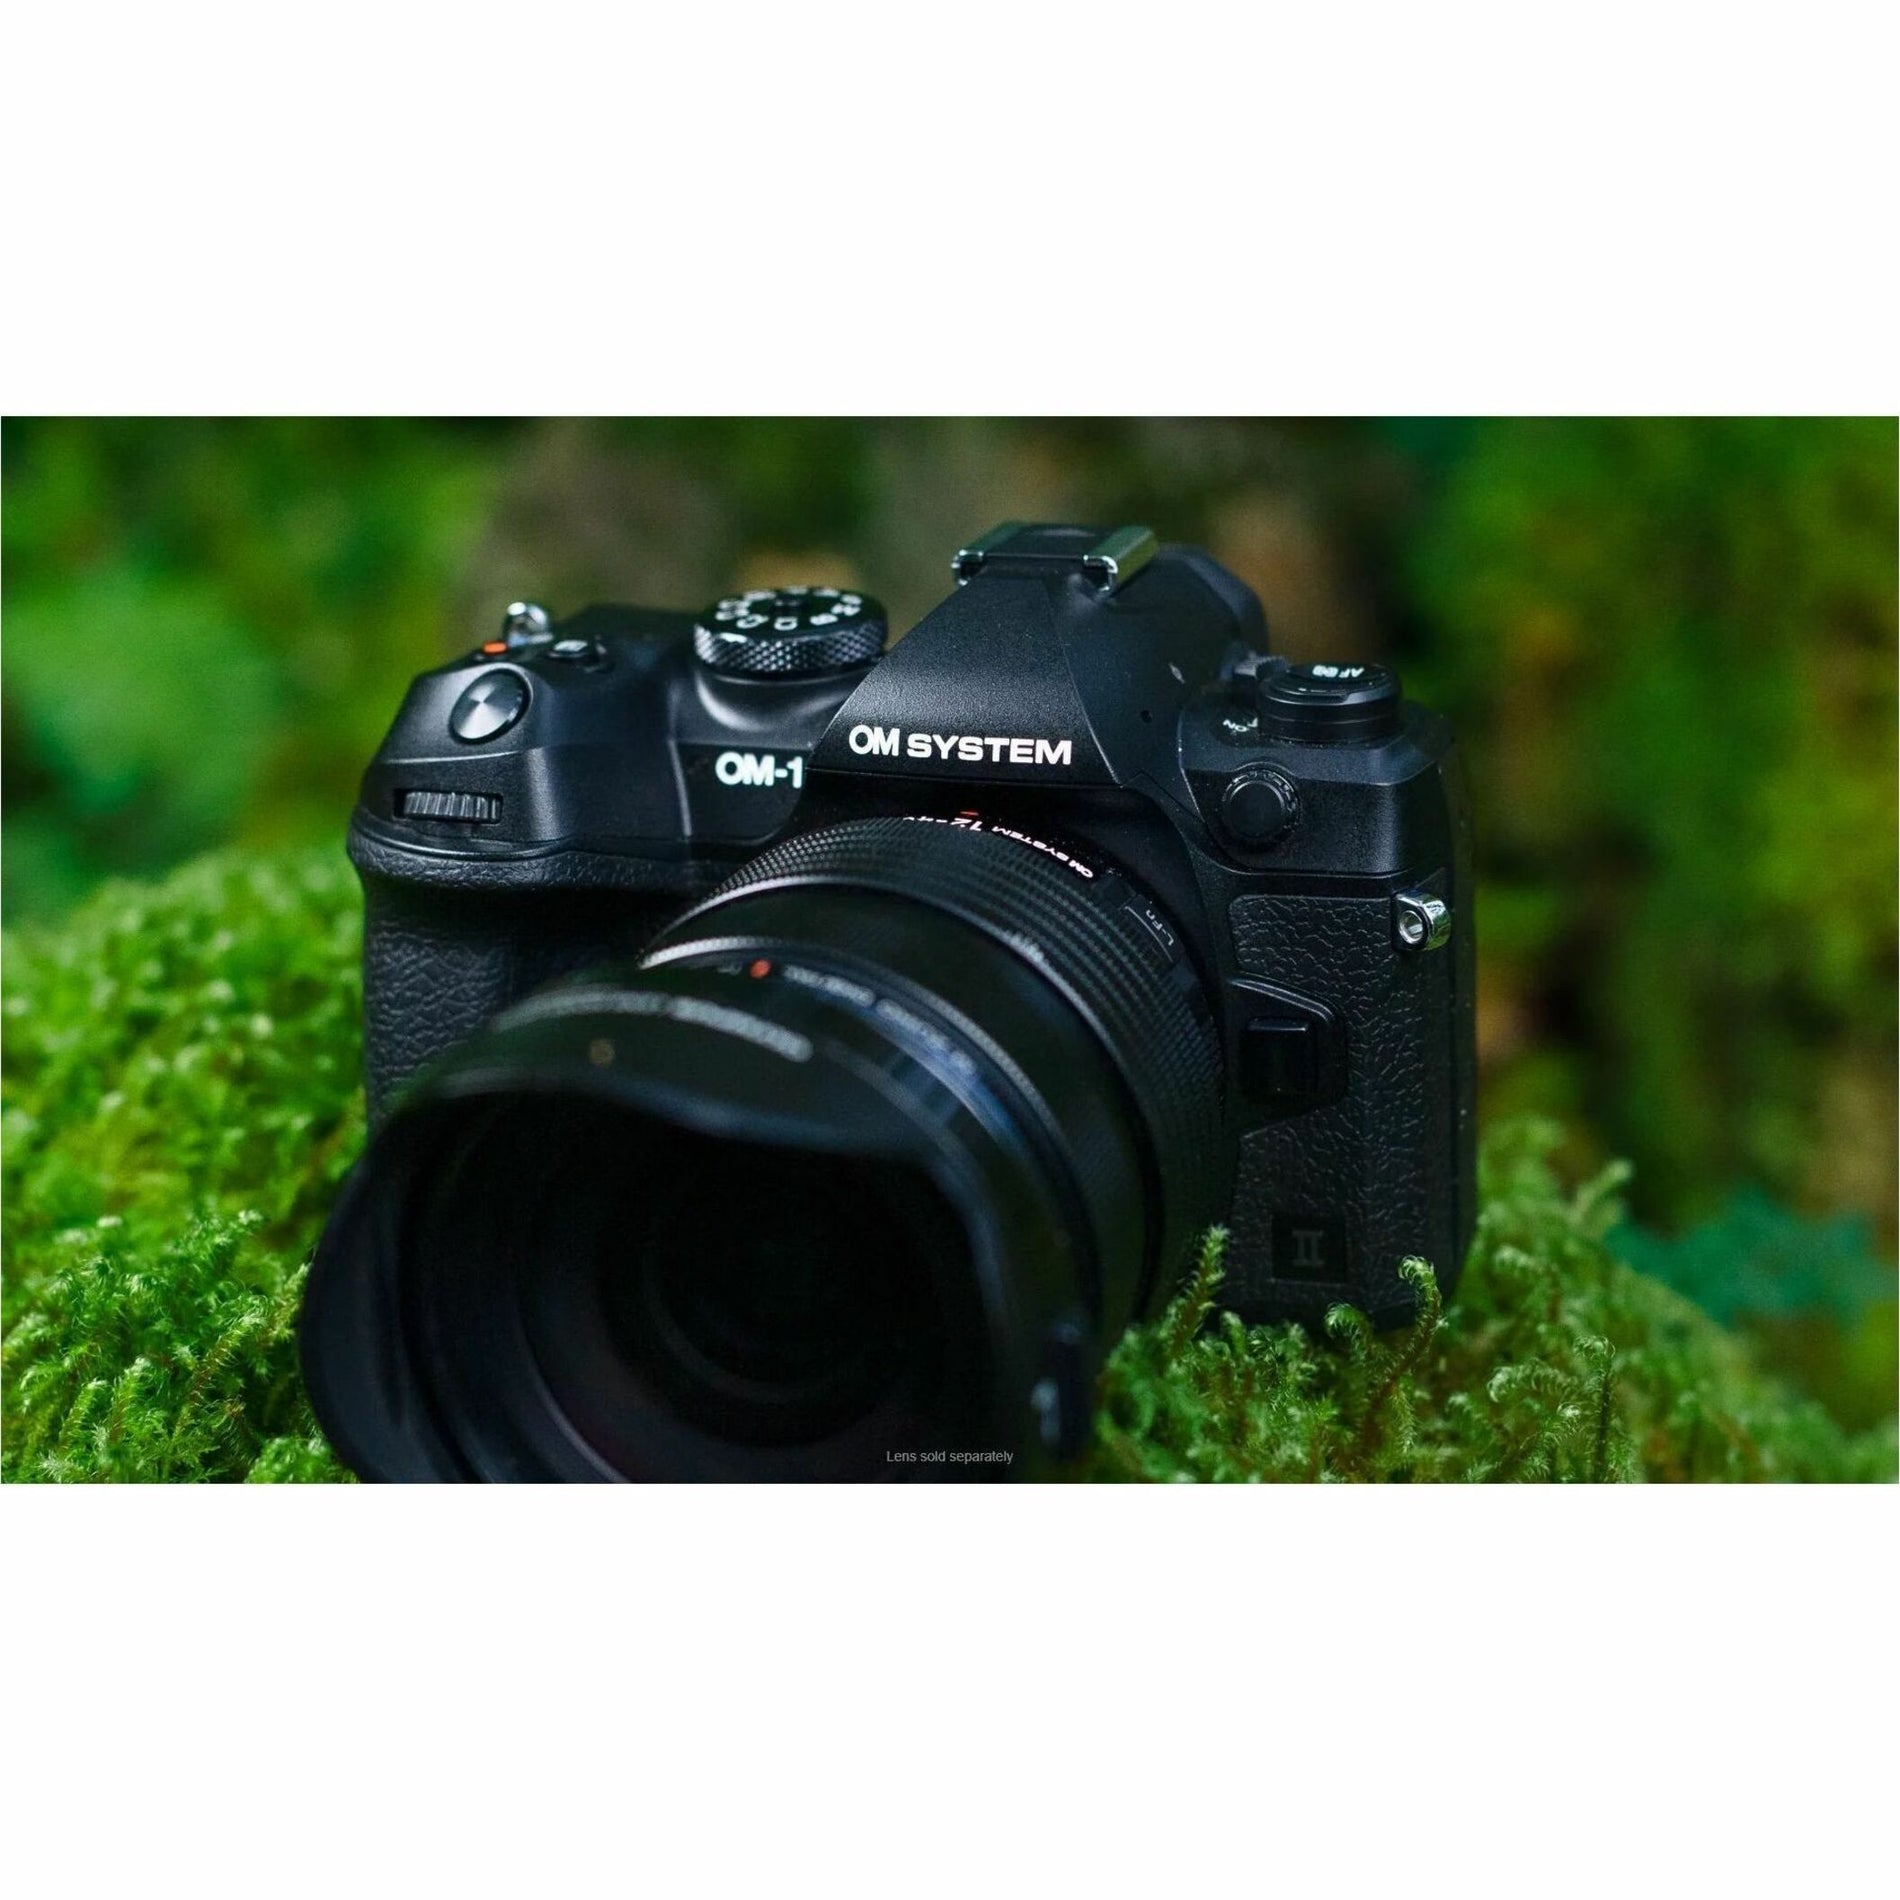 Olympus V210041BU000 OM SYSTEM OM-1 Mark II Mirrorless Camera with Lens, 20.4 Megapixel, 4K Video